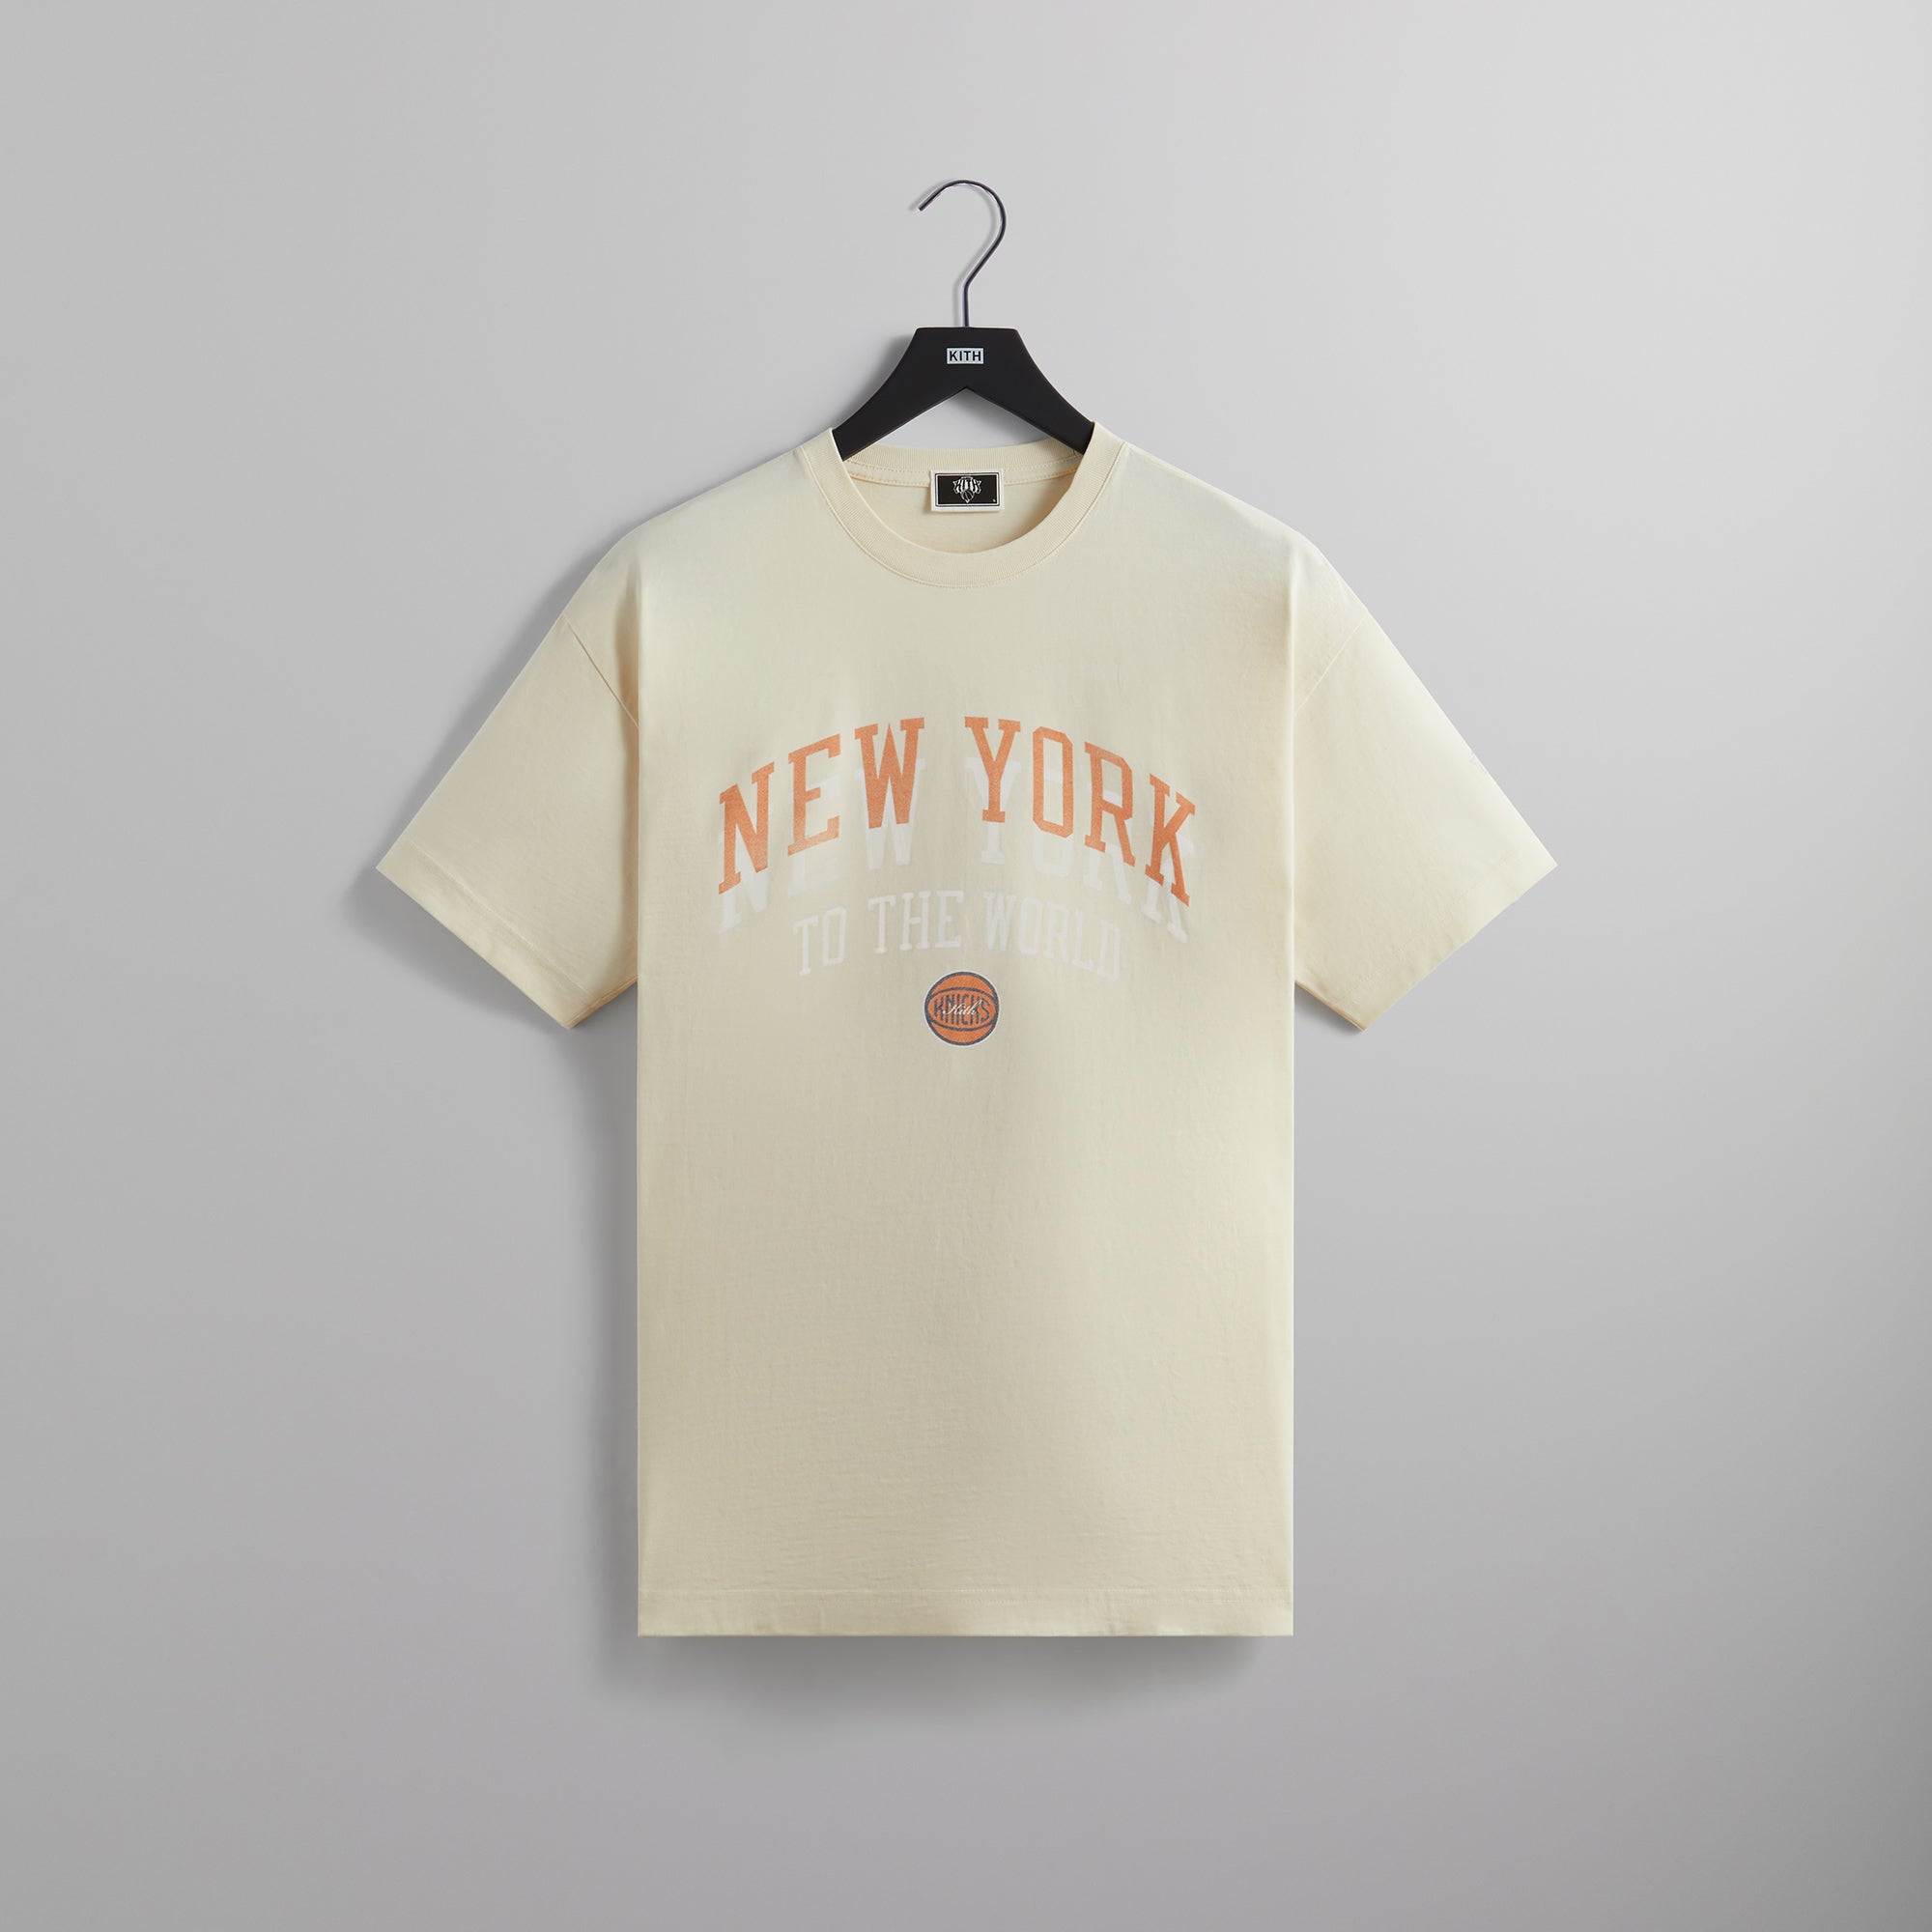 Kith Tokyo New York Knicks Vintage Tee③